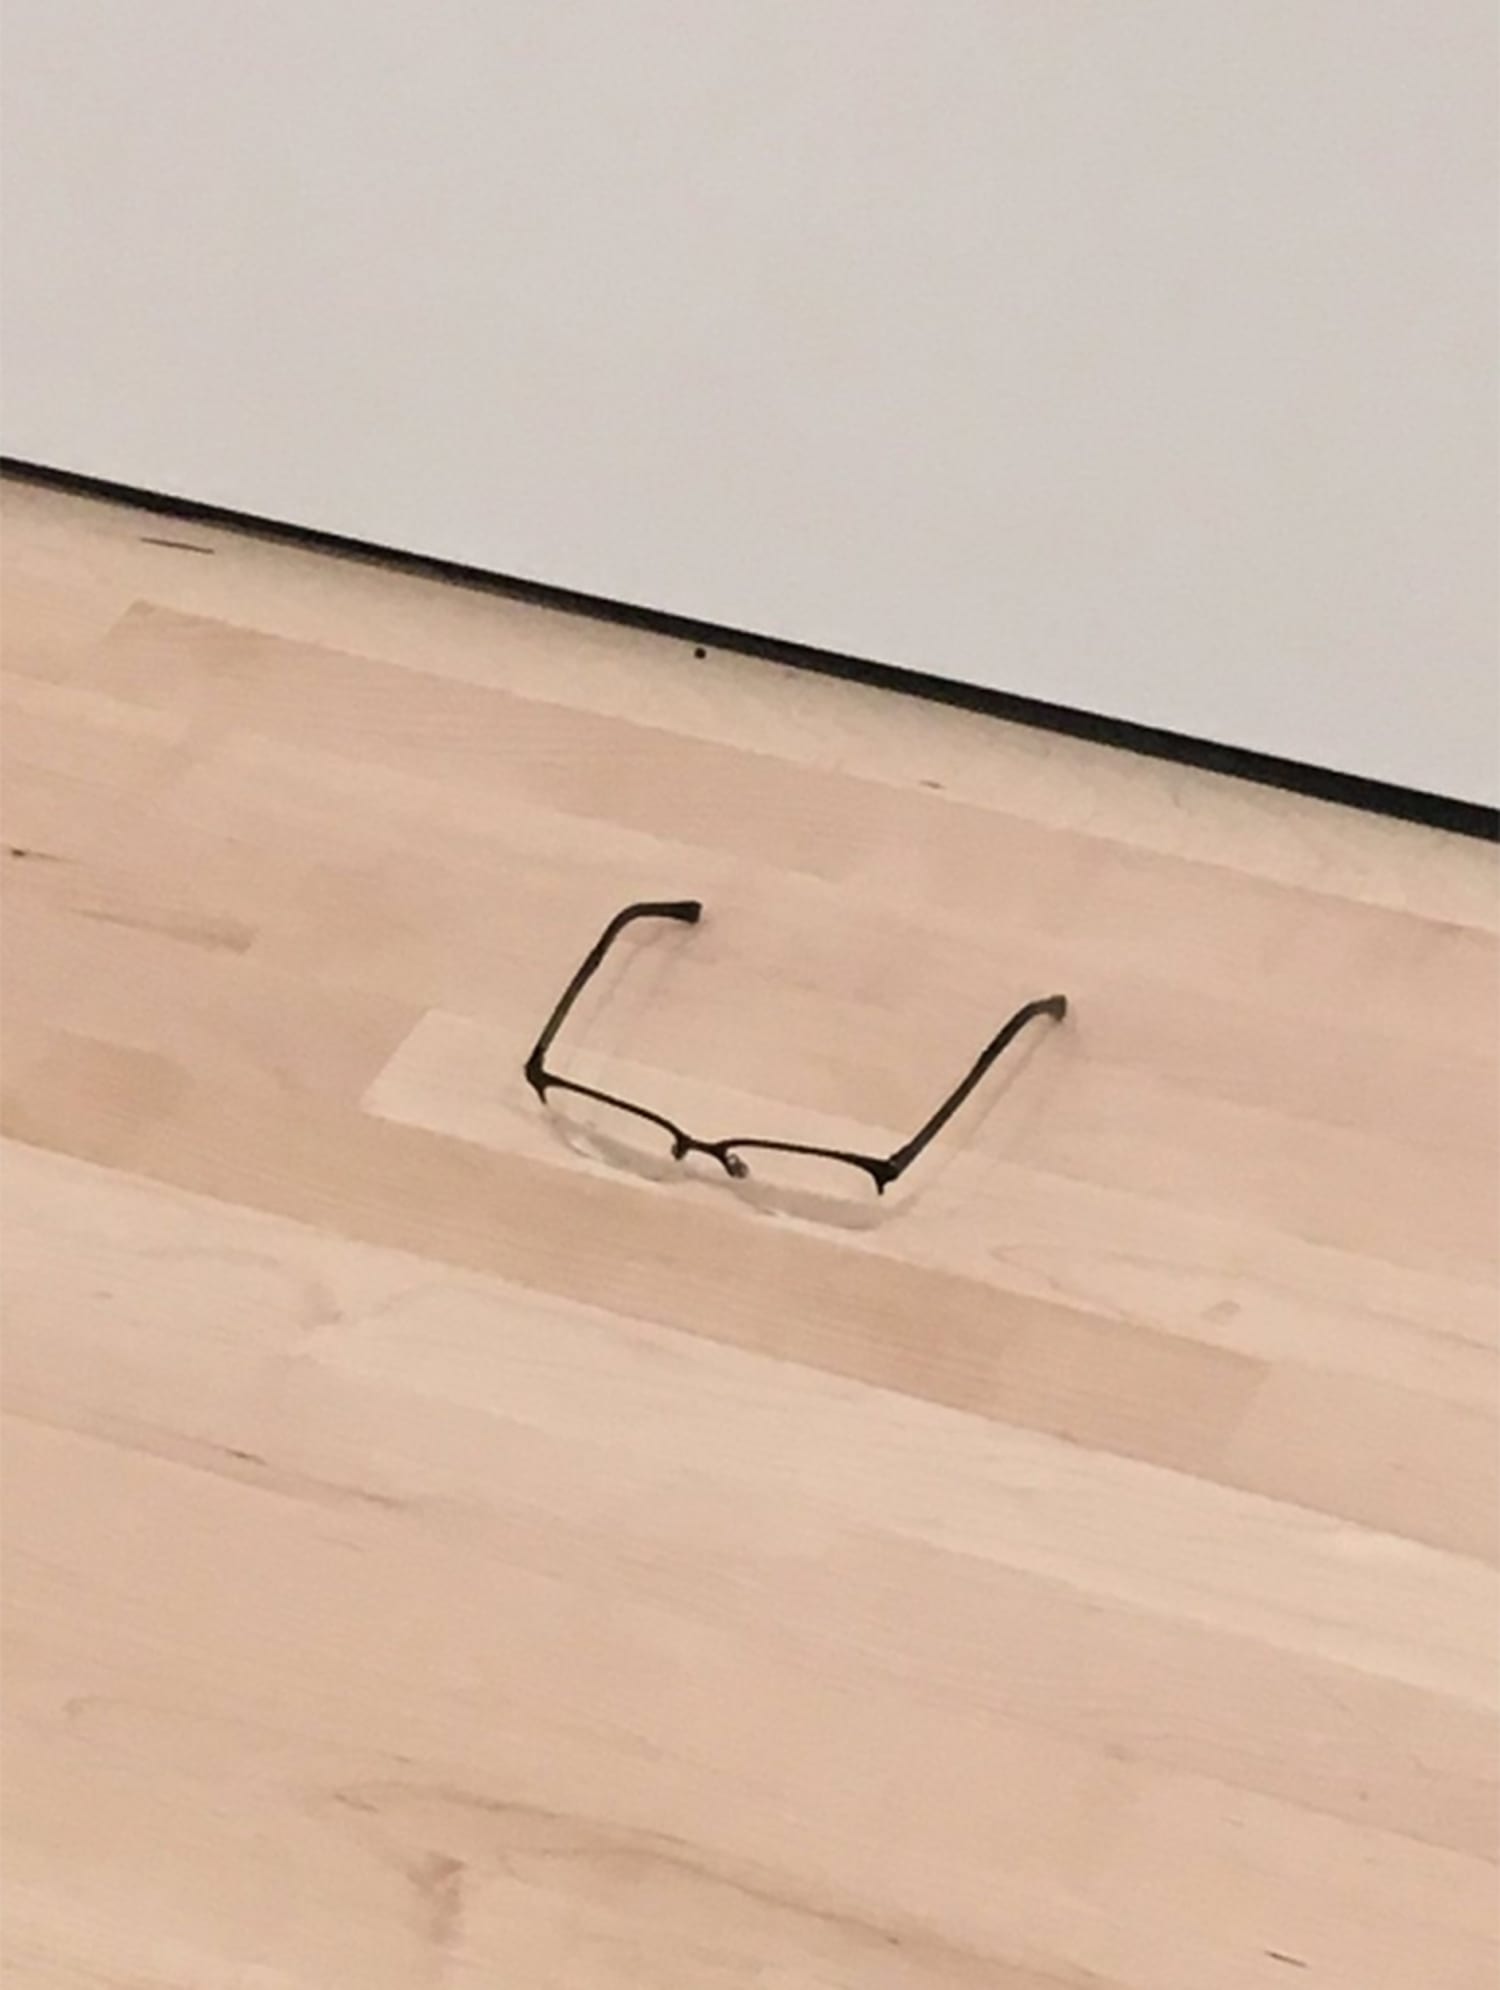 Teens create 'art exhibit' of a pair of glasses at museum